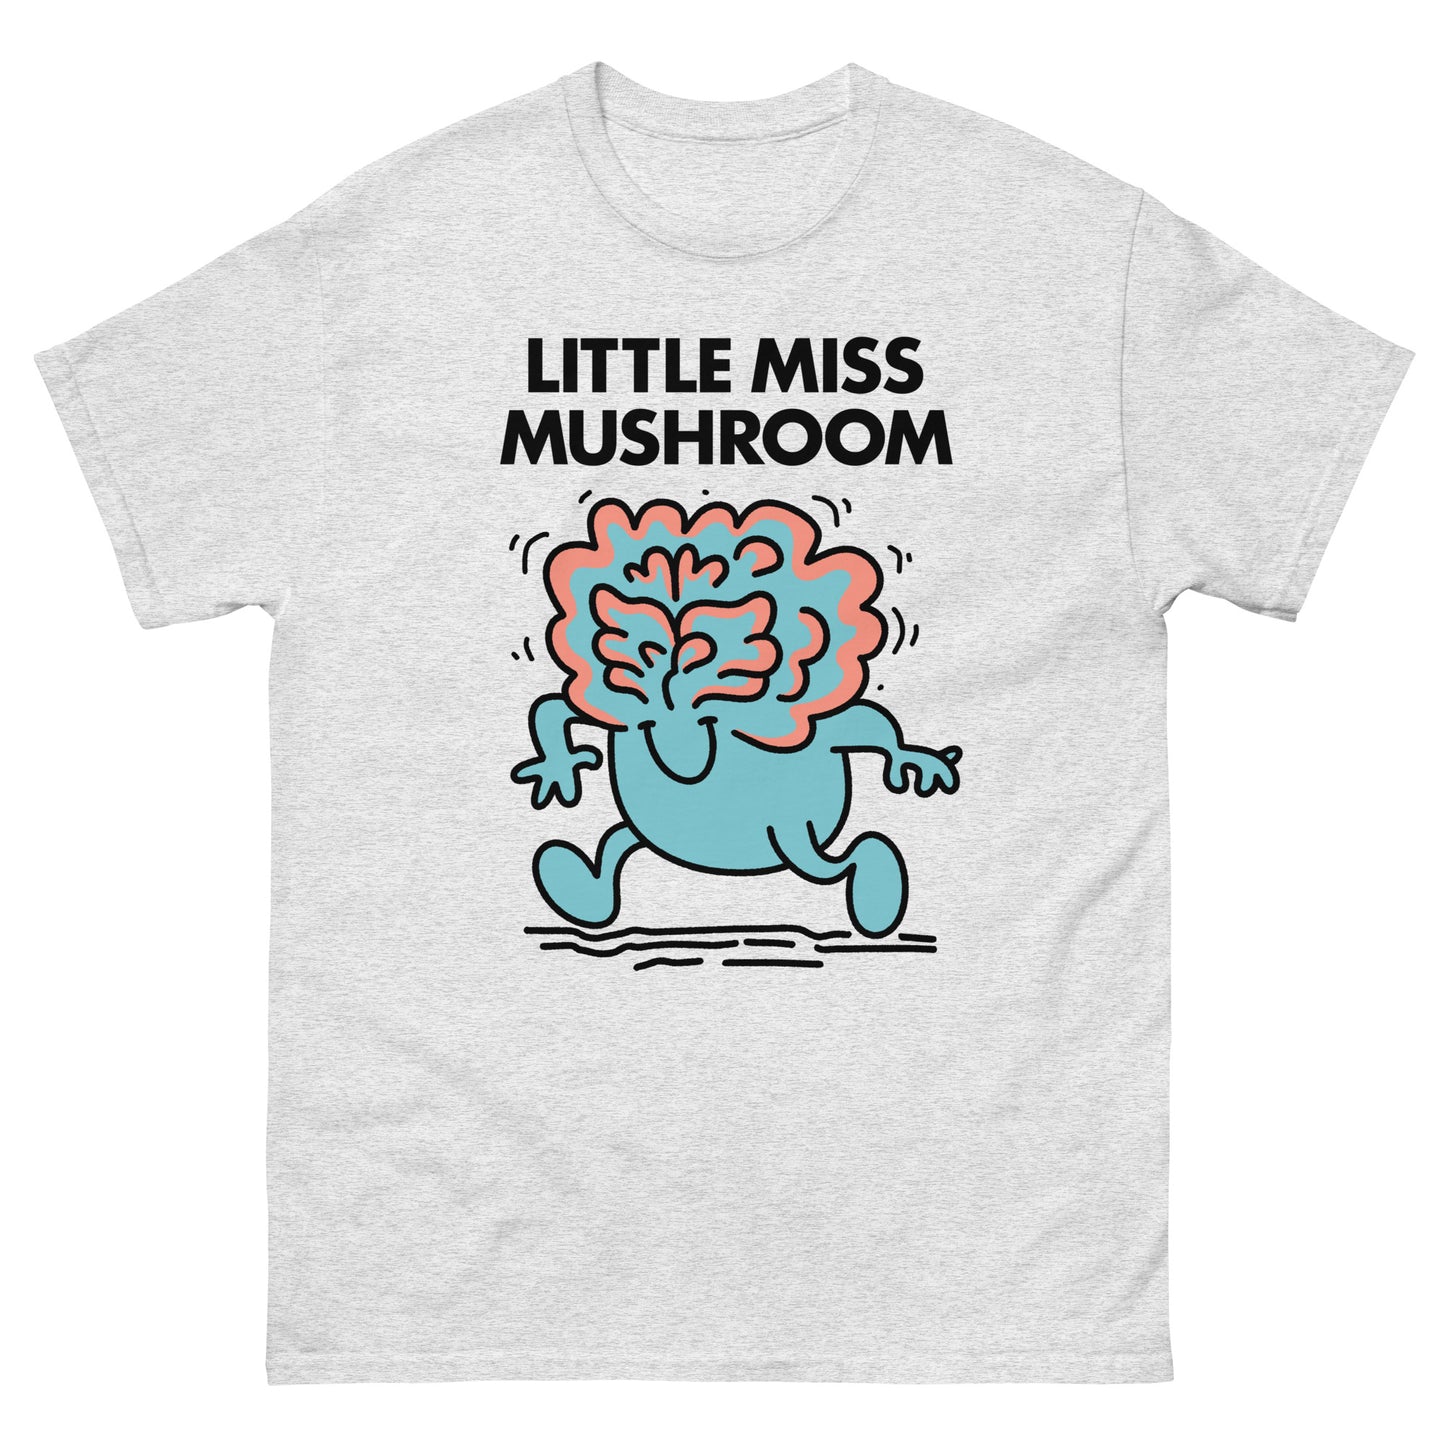 Little Miss Mushroom - Clicker from The Last of Us T-Shirt